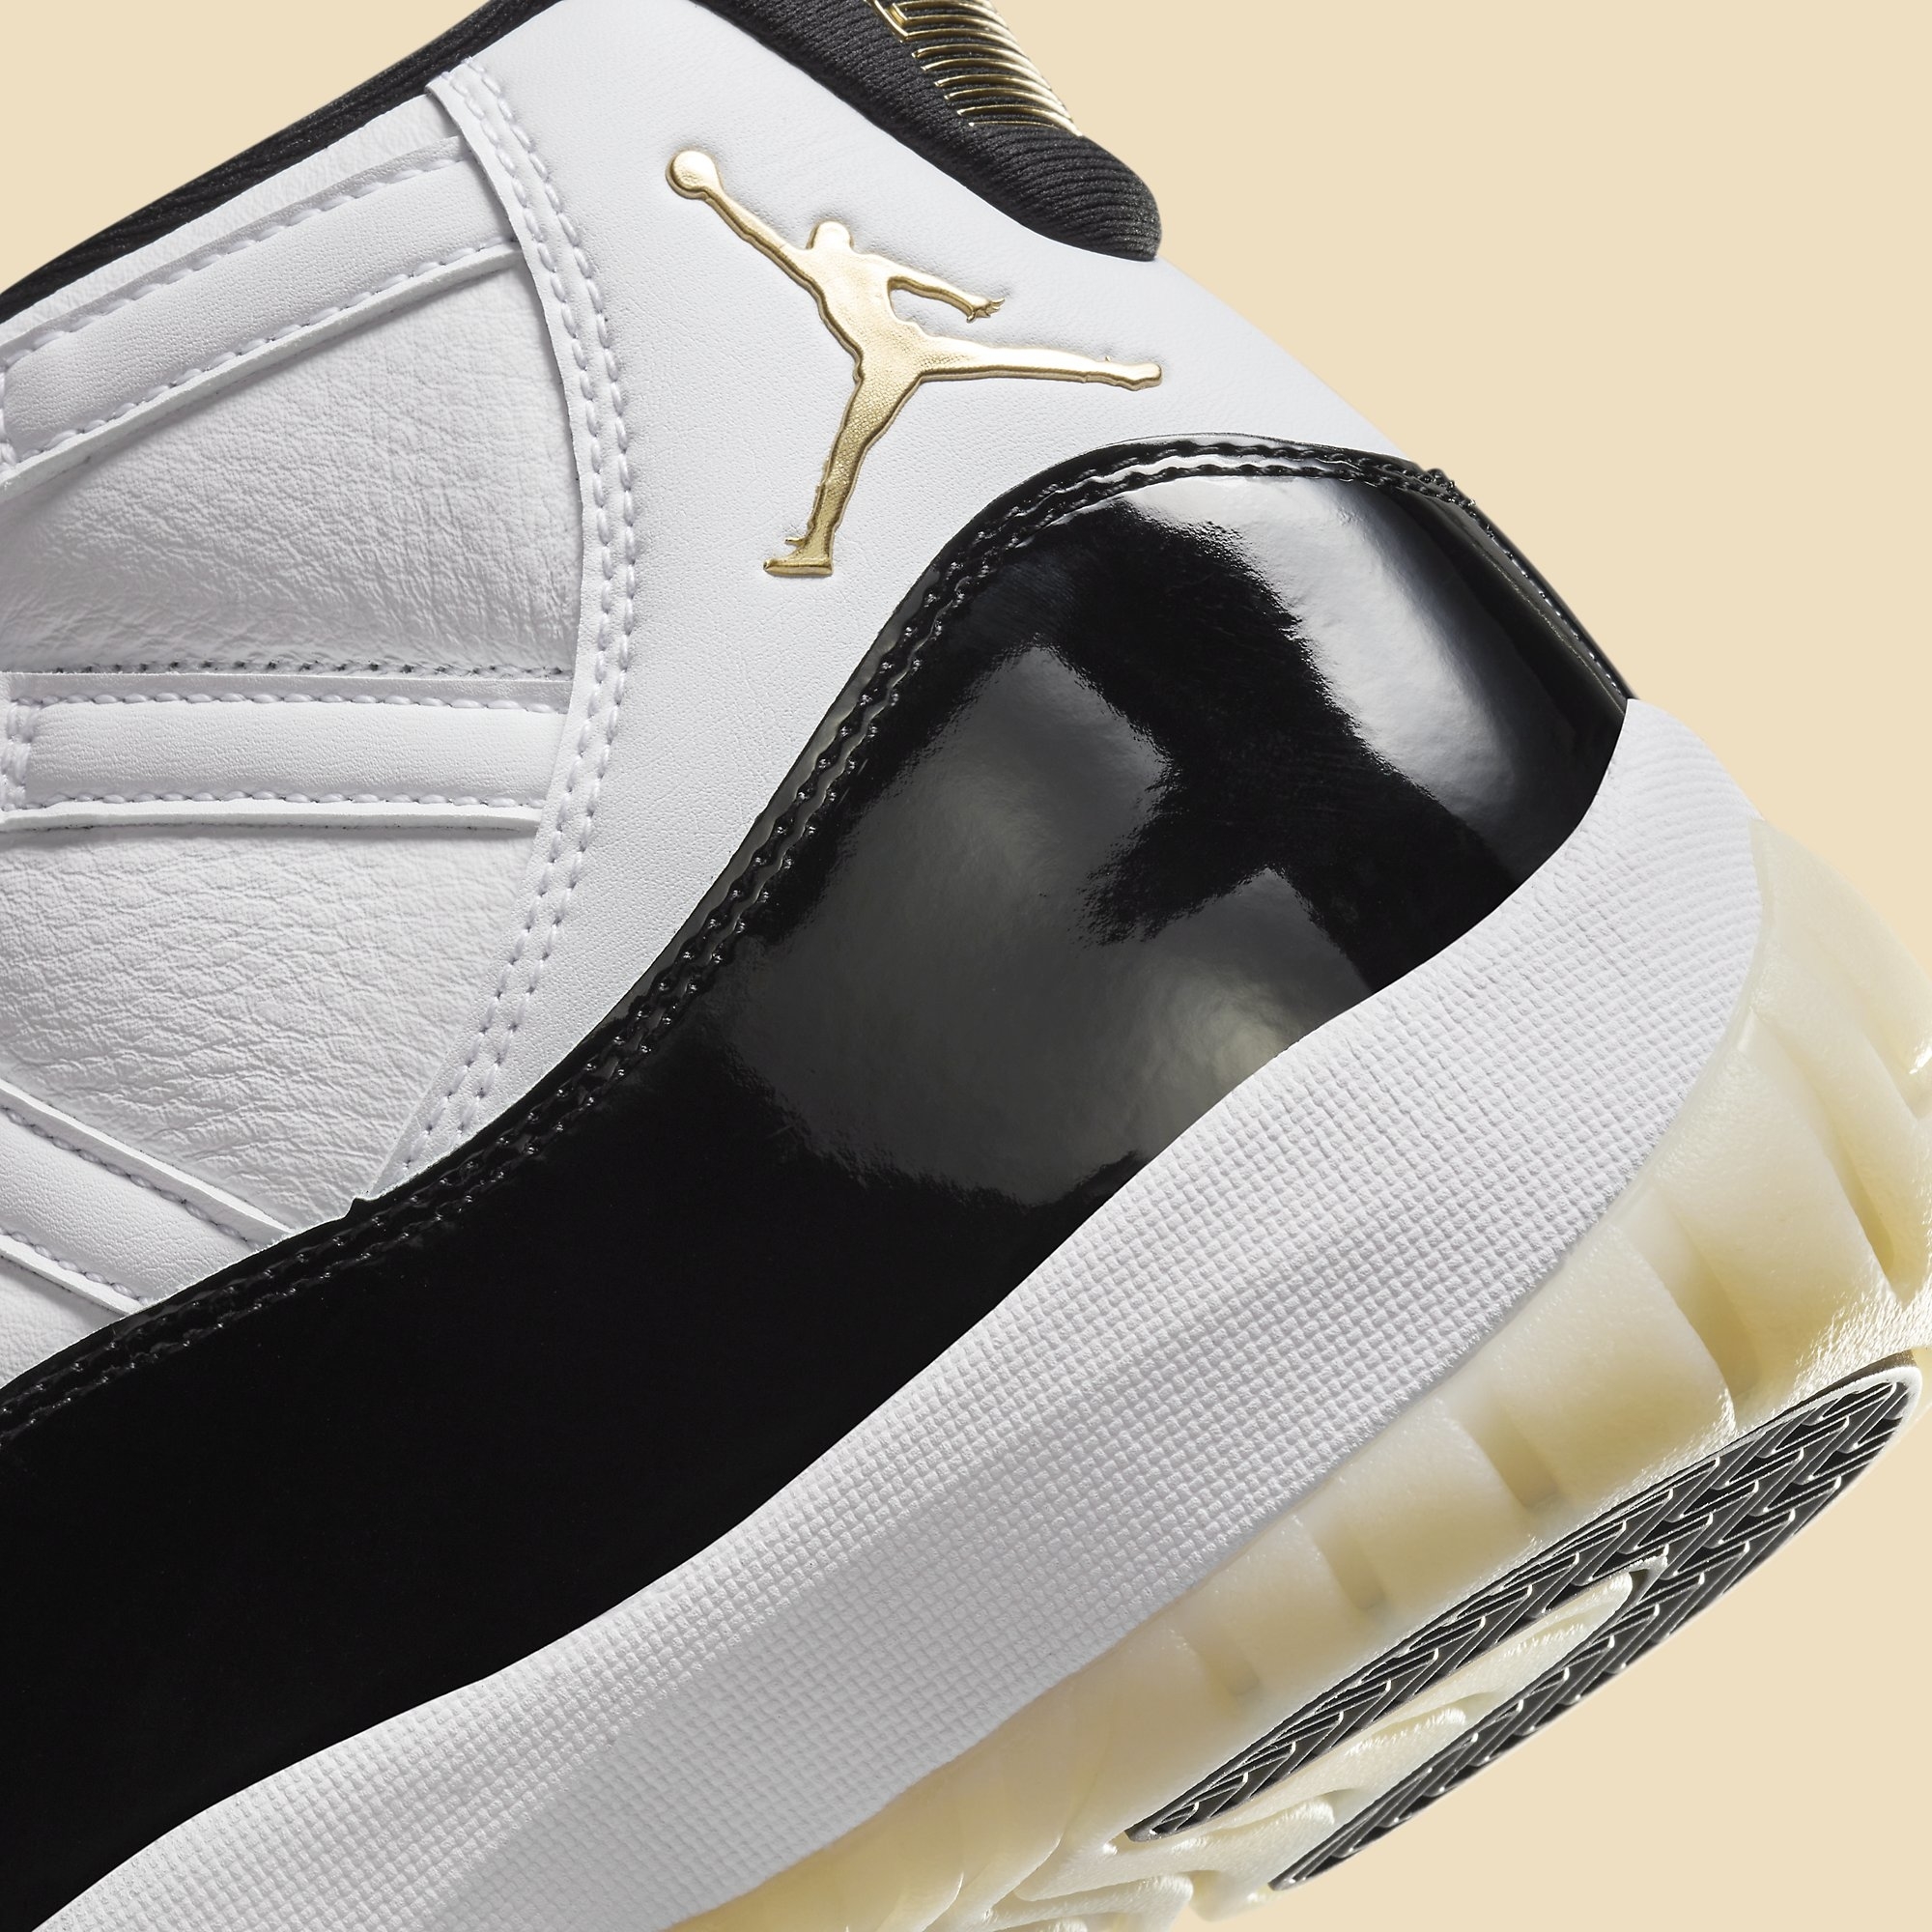 Nike Air Jordan 11 Retro, review and details, From £109.90